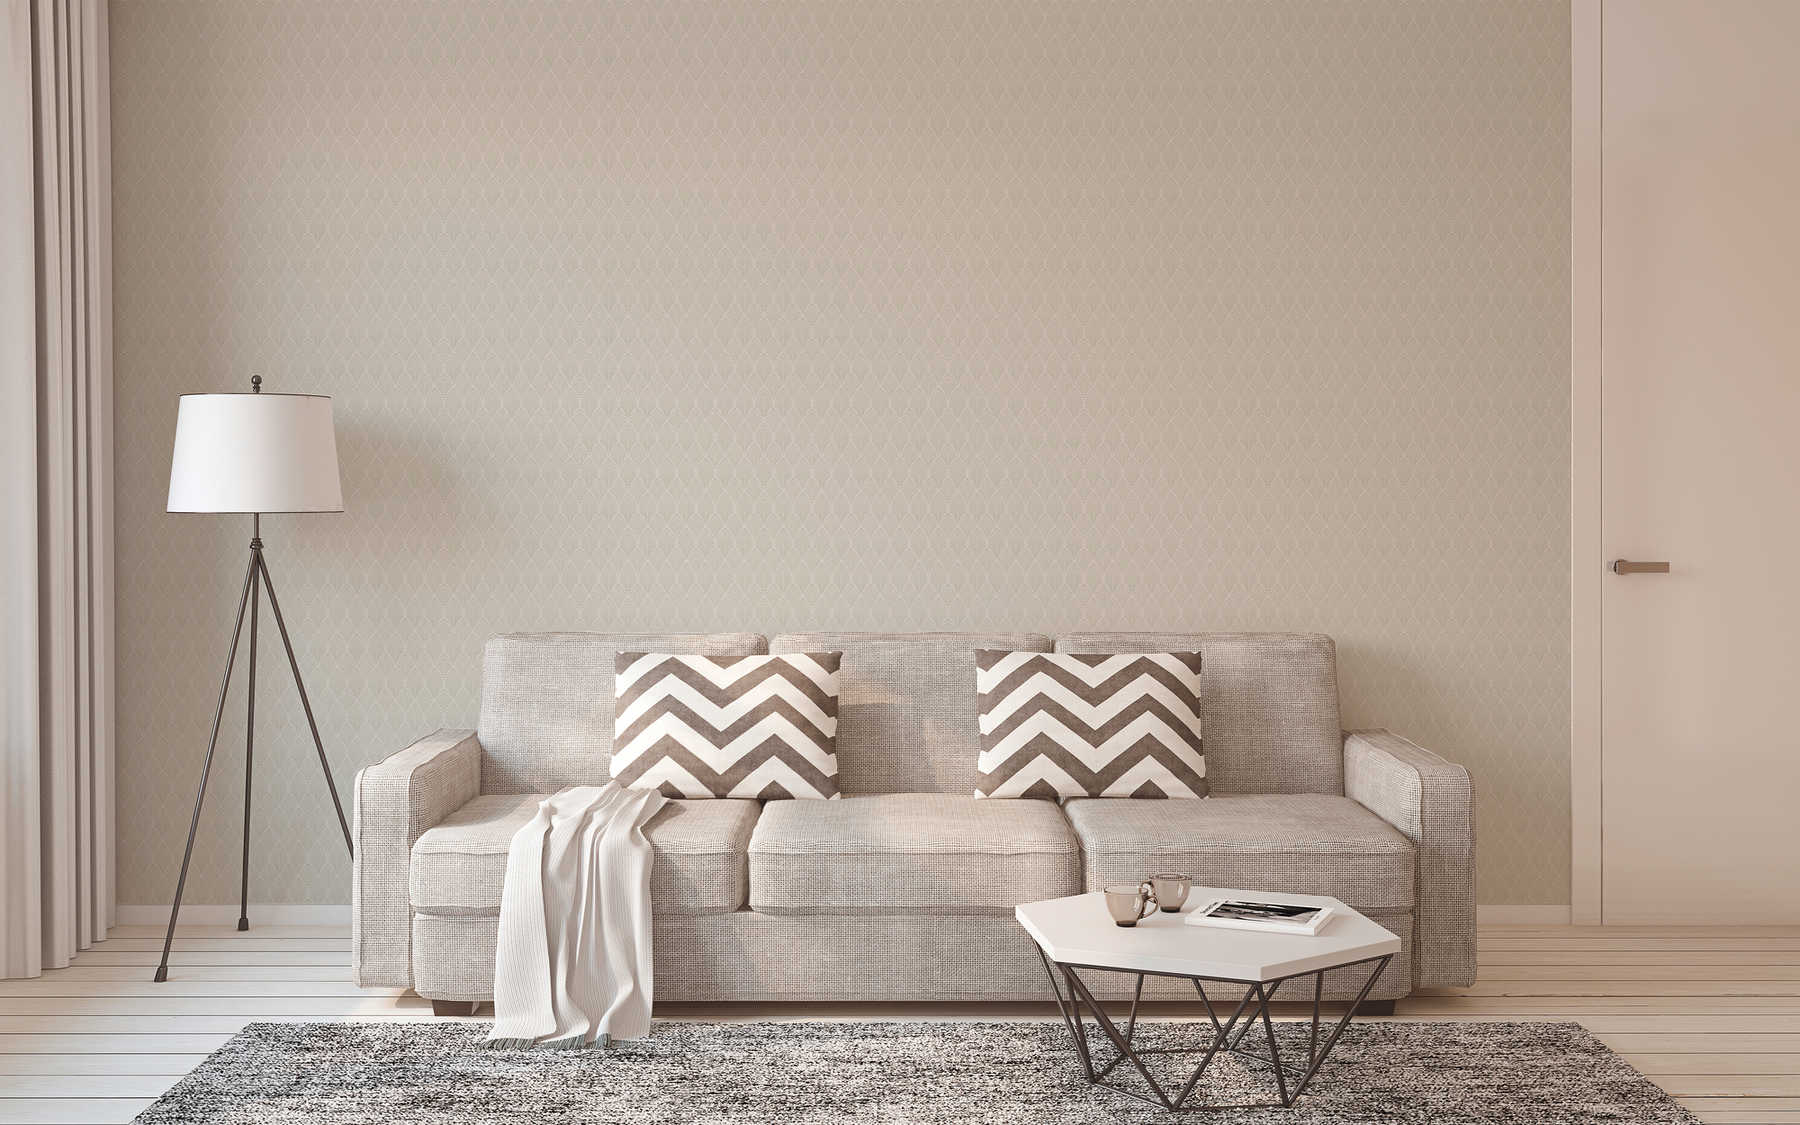             Pattern wallpaper metallic design in art deco style - white, silver
        